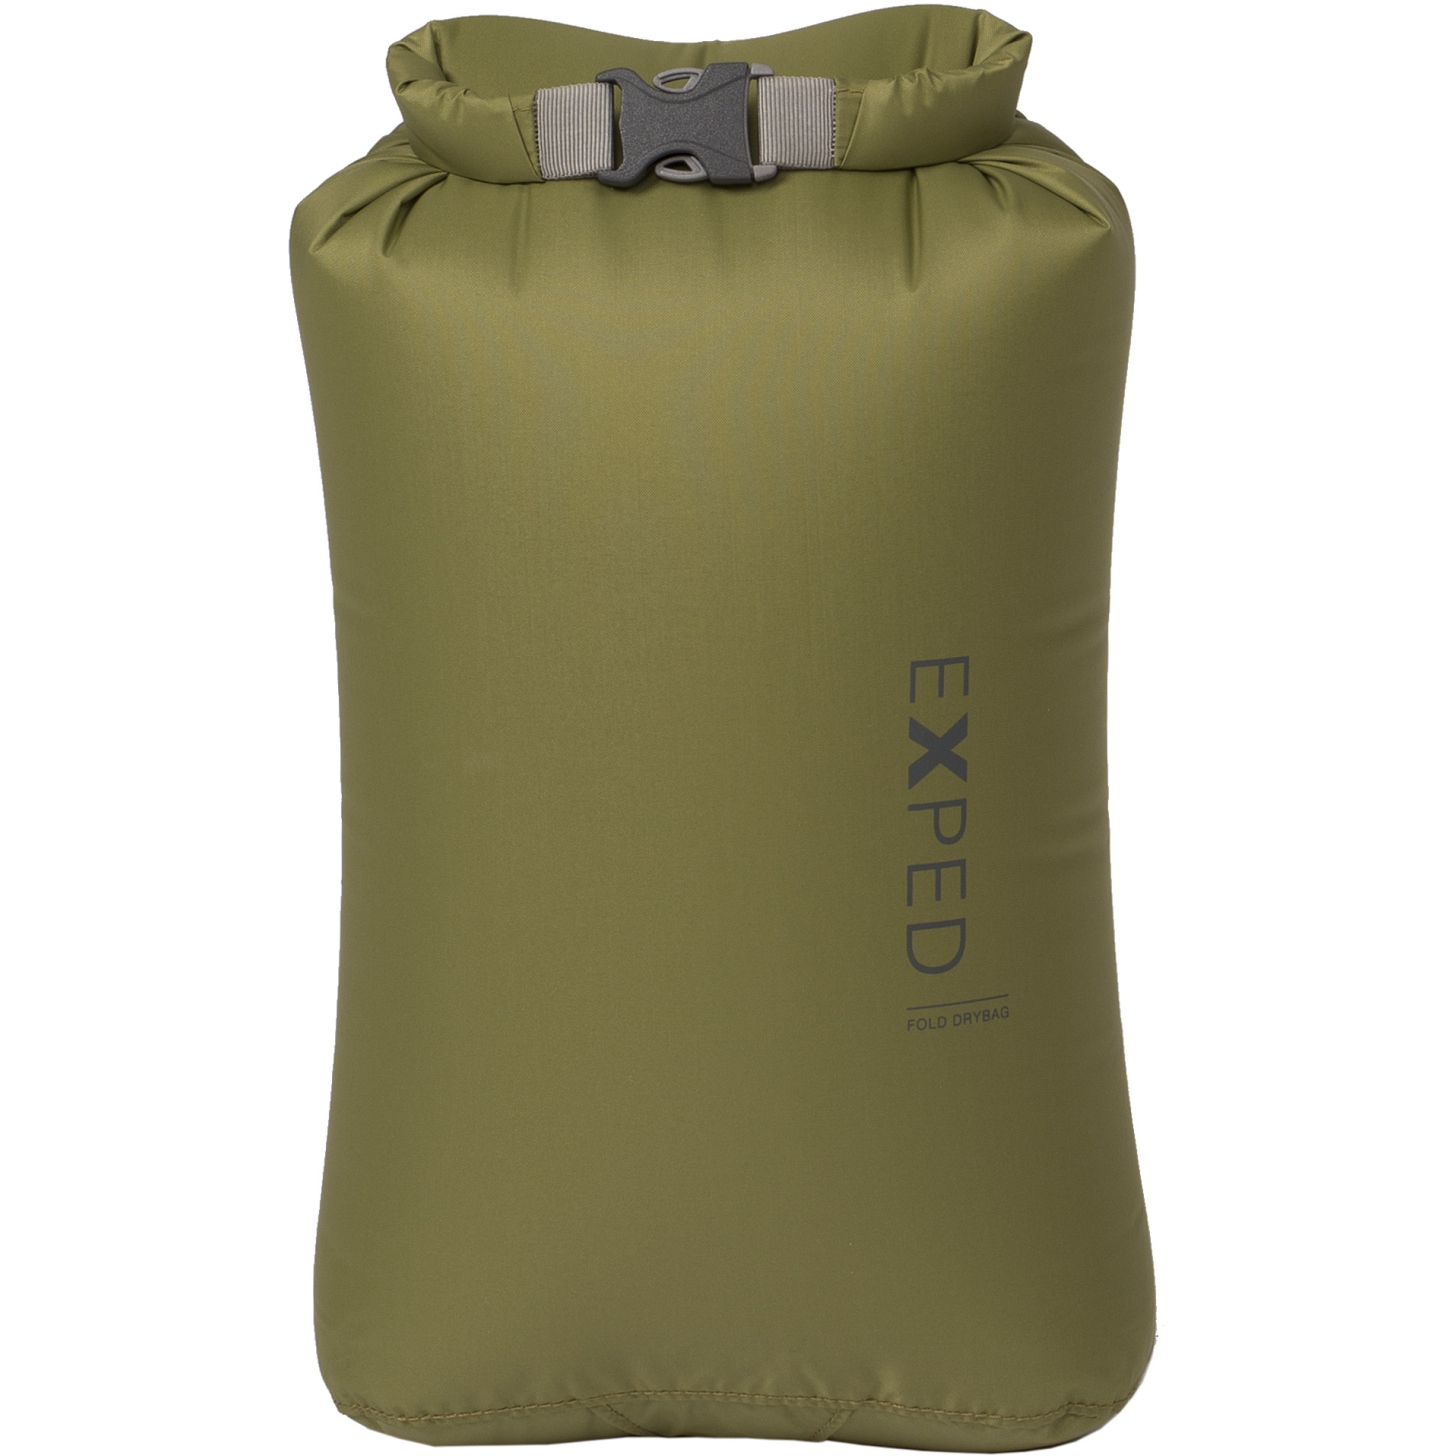 Productfoto van Exped Fold Drybag Pakzak - XS - groen